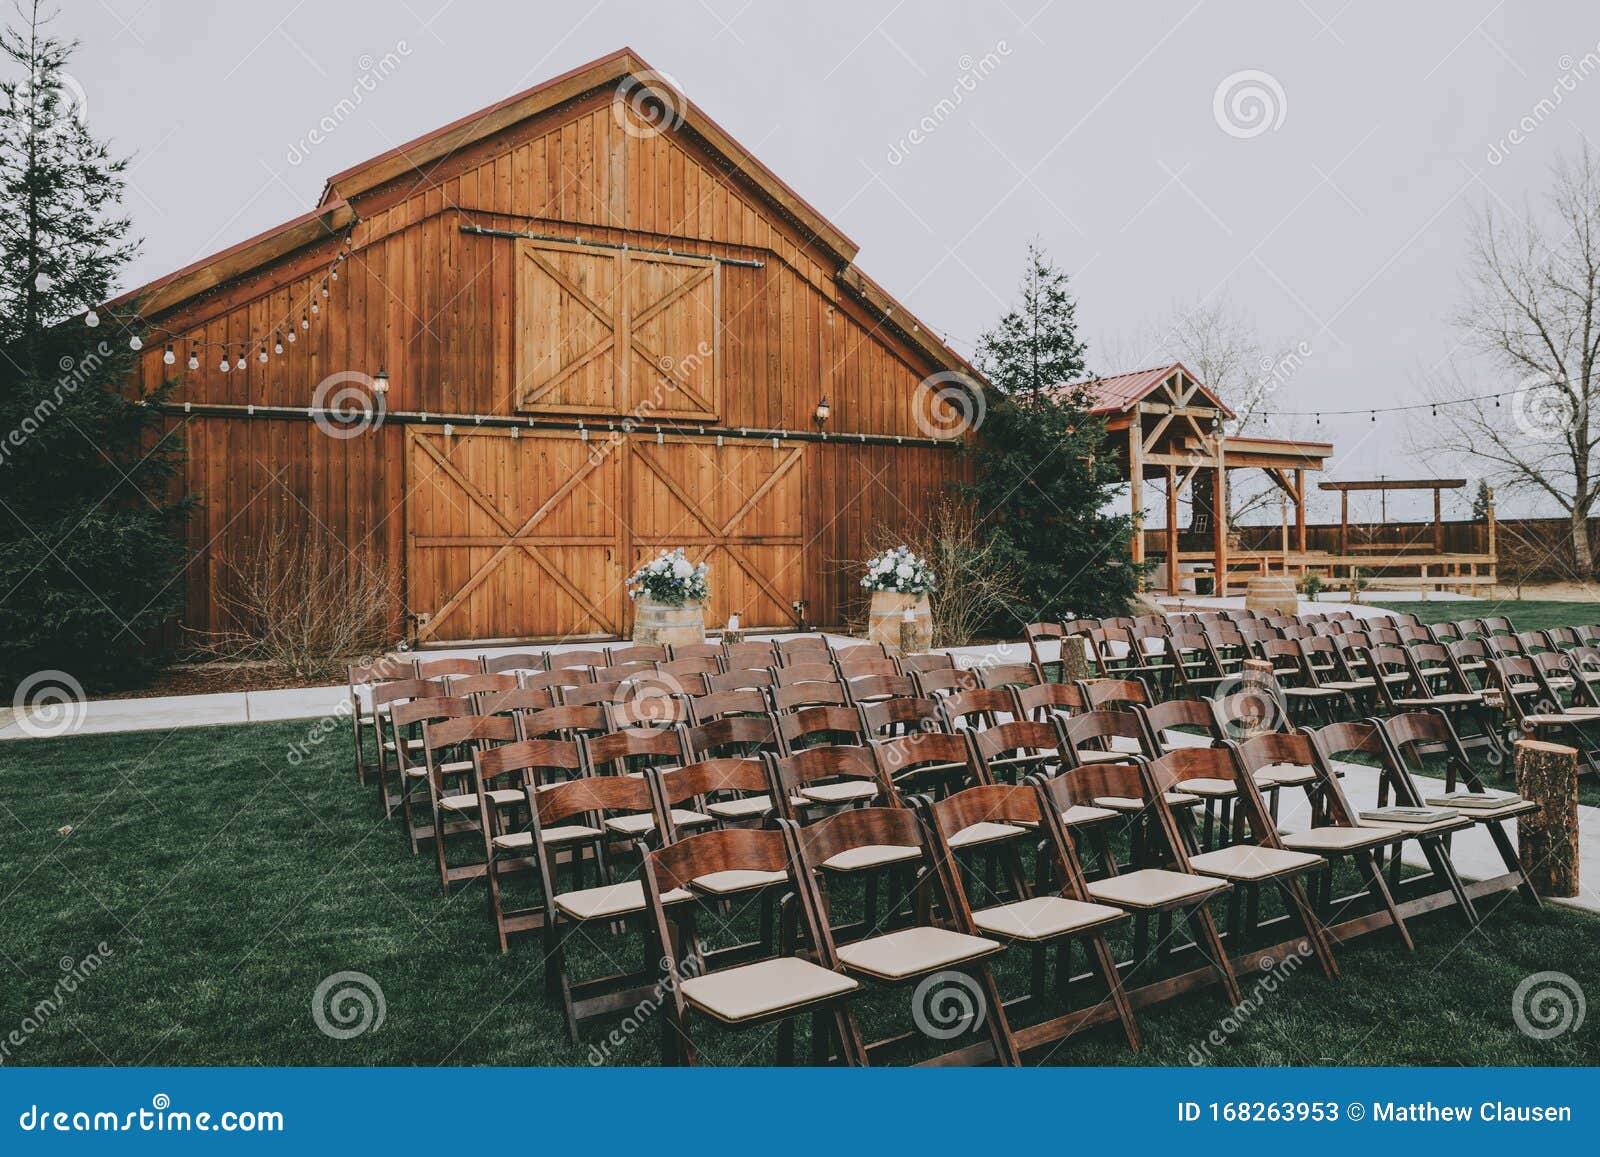 wedding reception at barn.